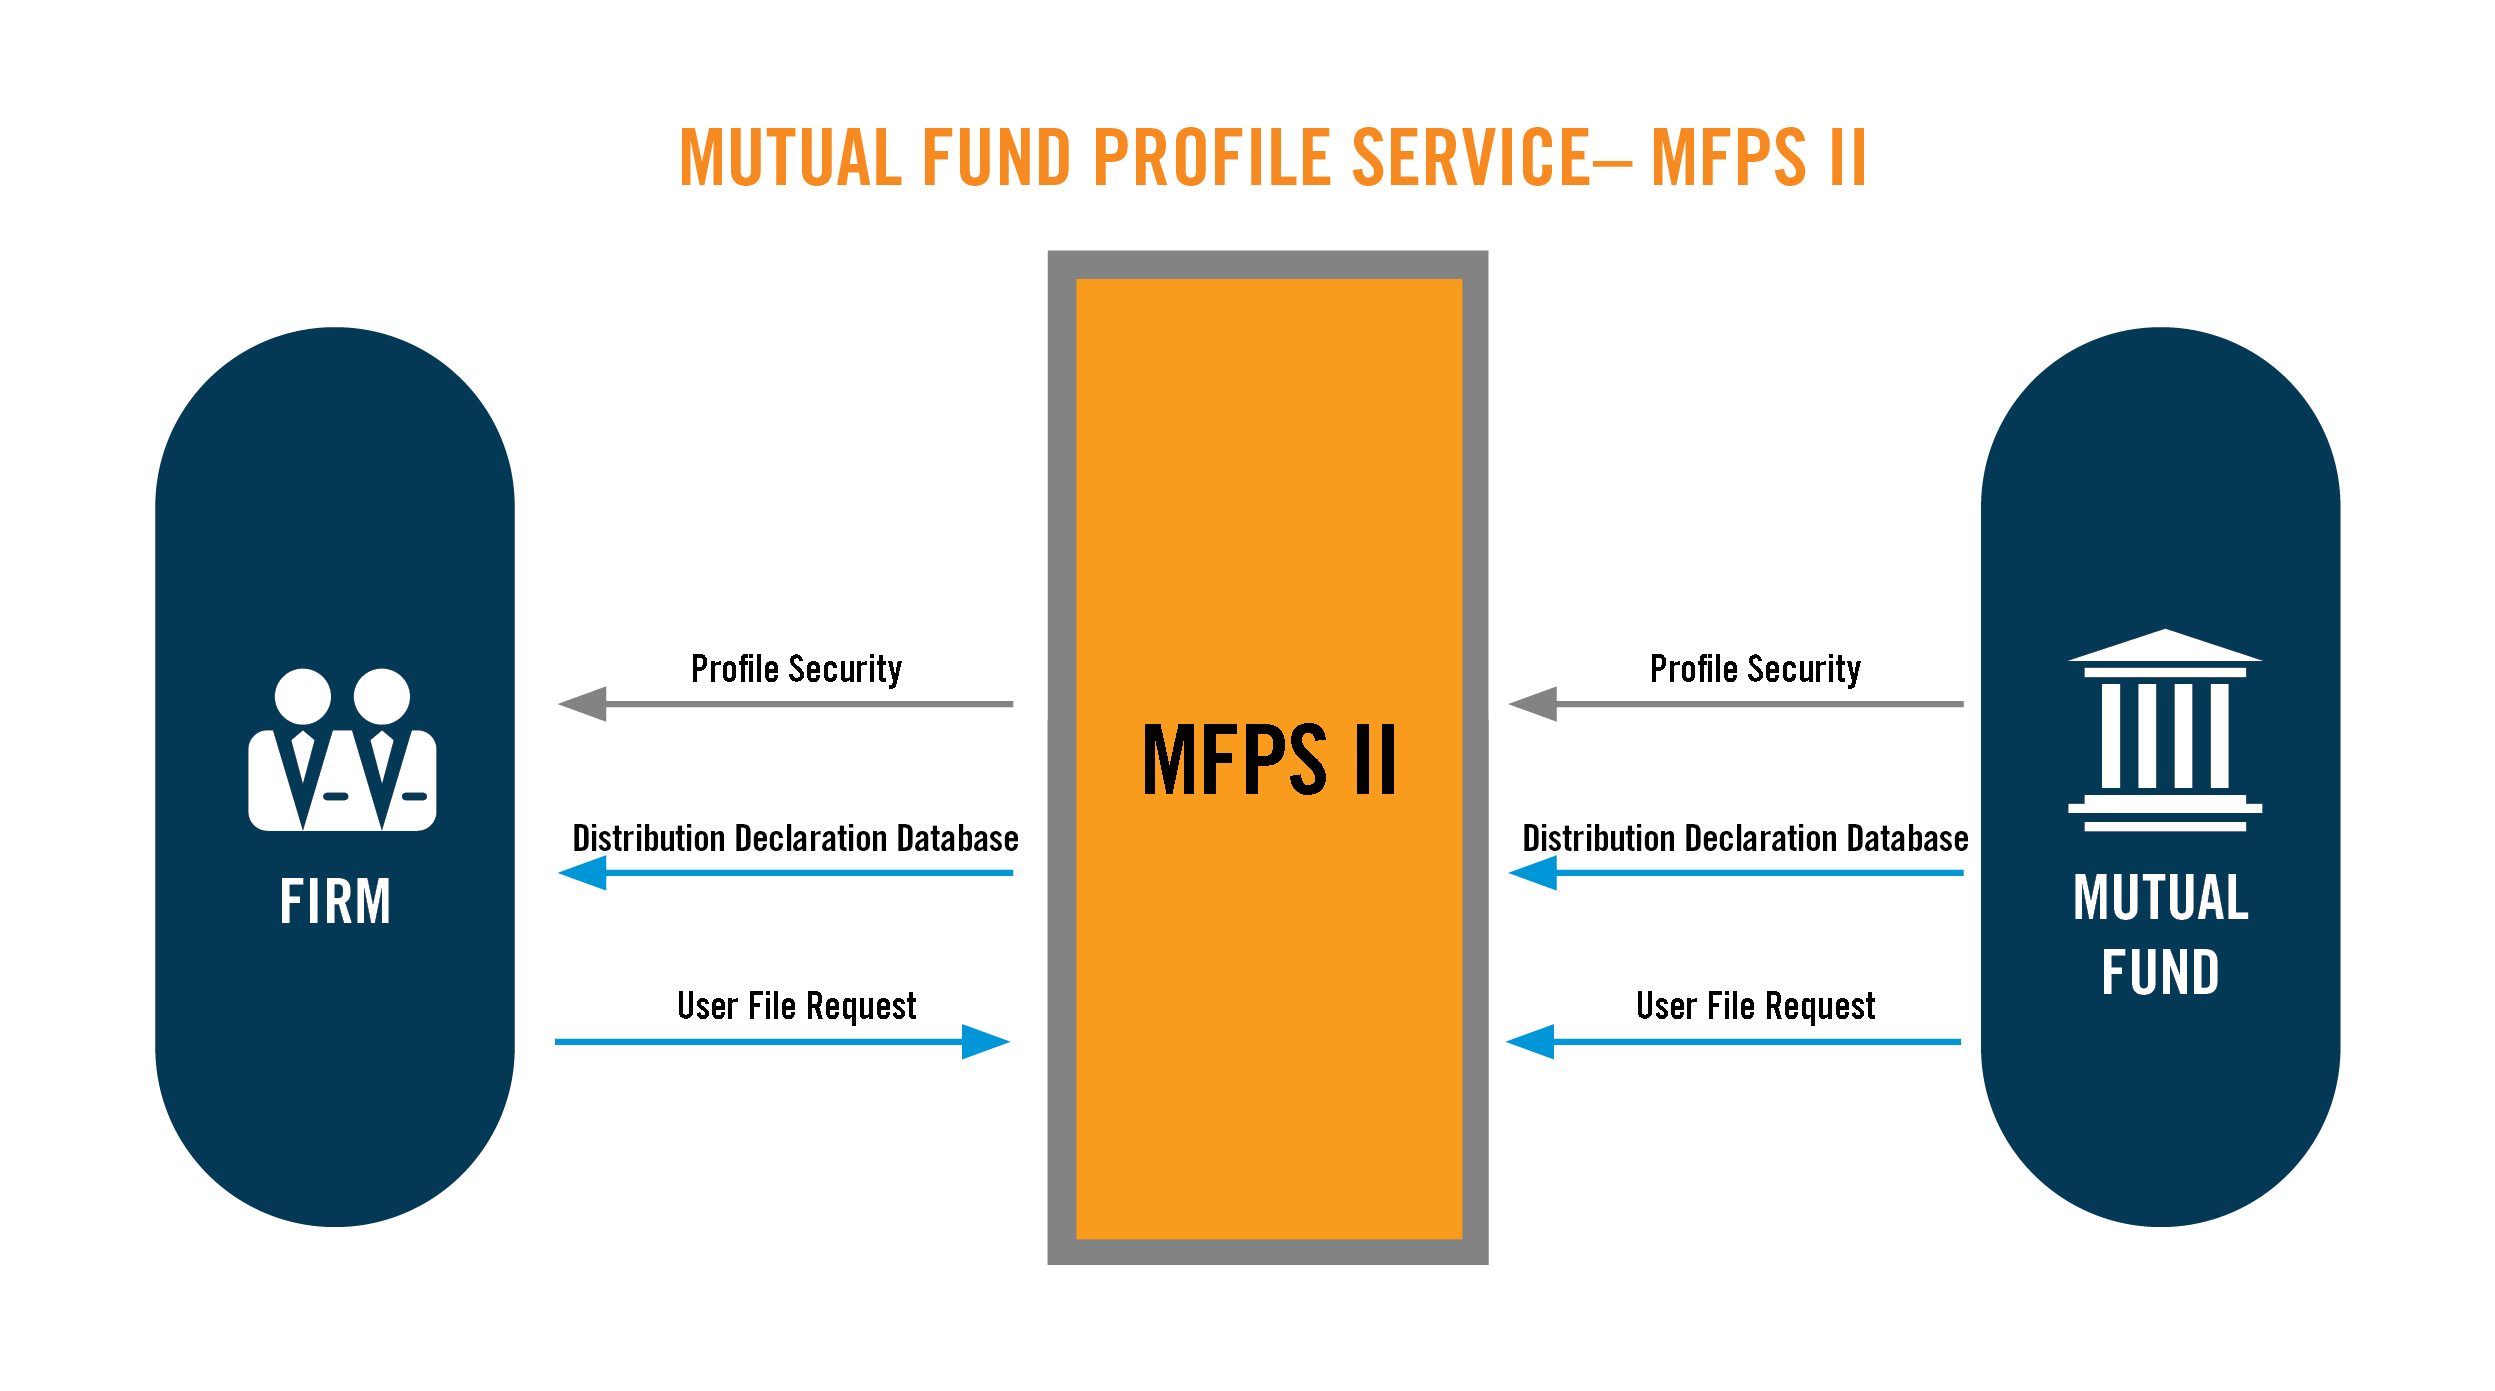 Mutual Fund Services Profile Service - MFPS II Schematic